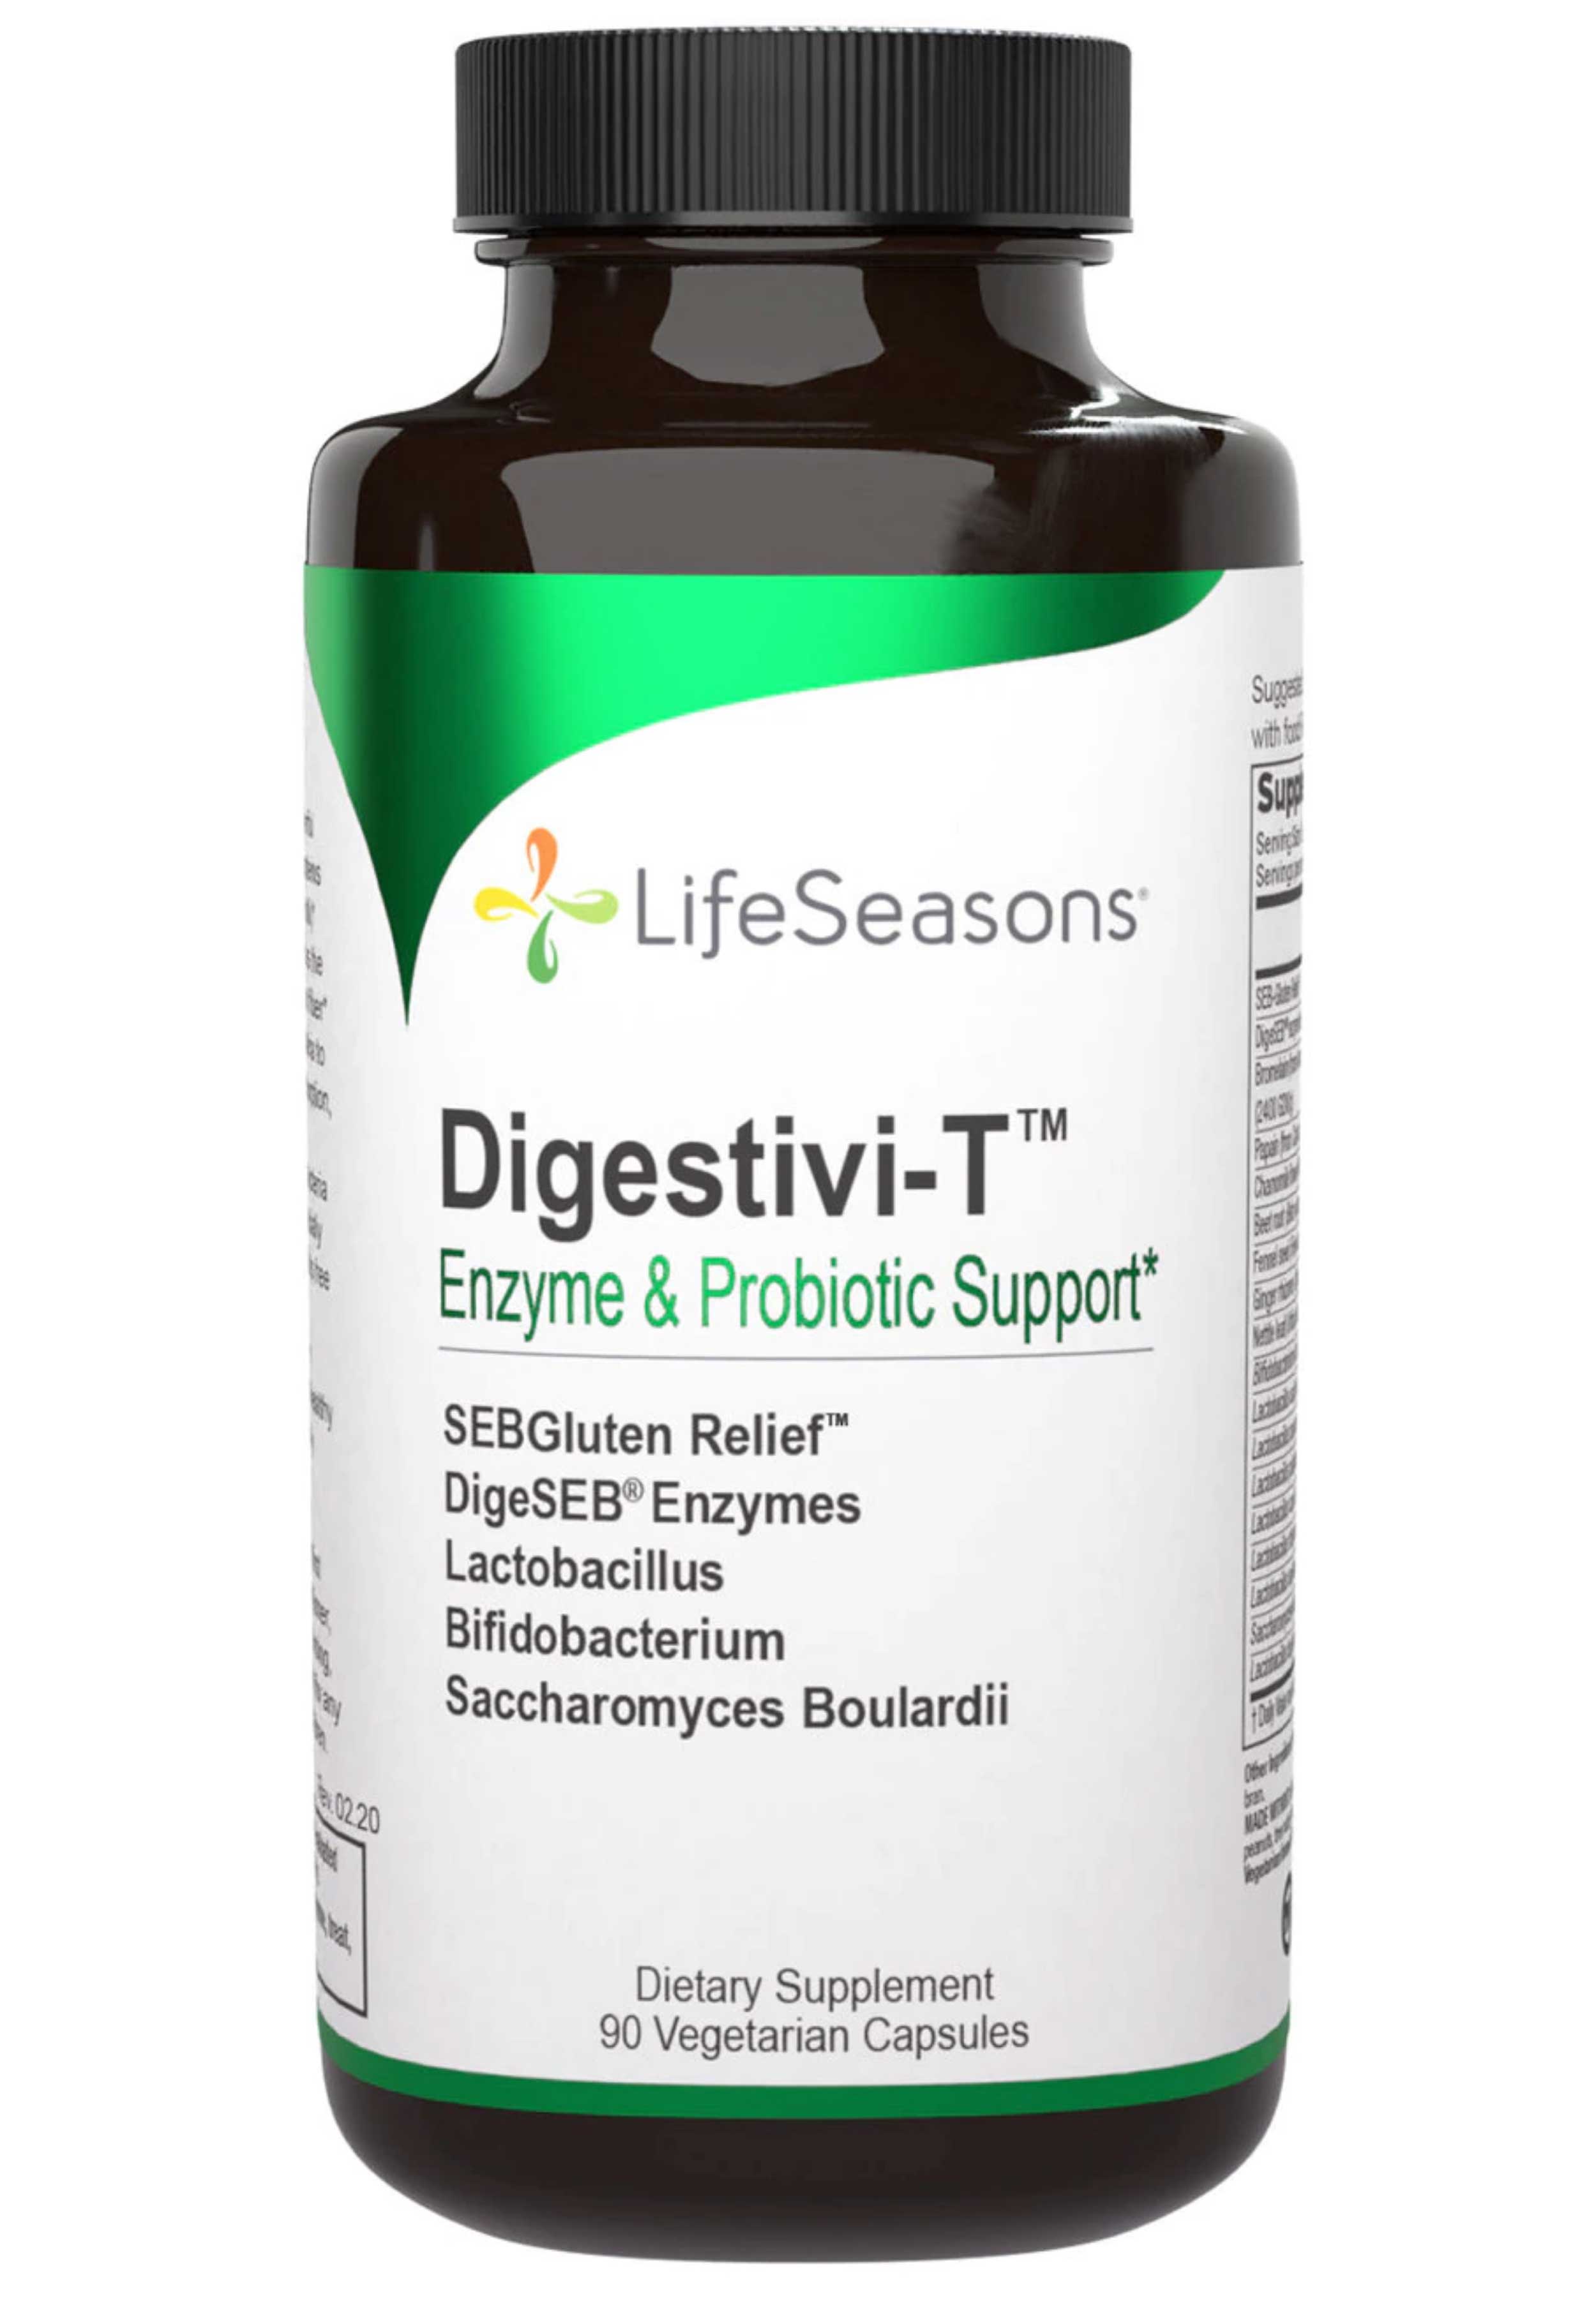 LifeSeasons Digestivi-T